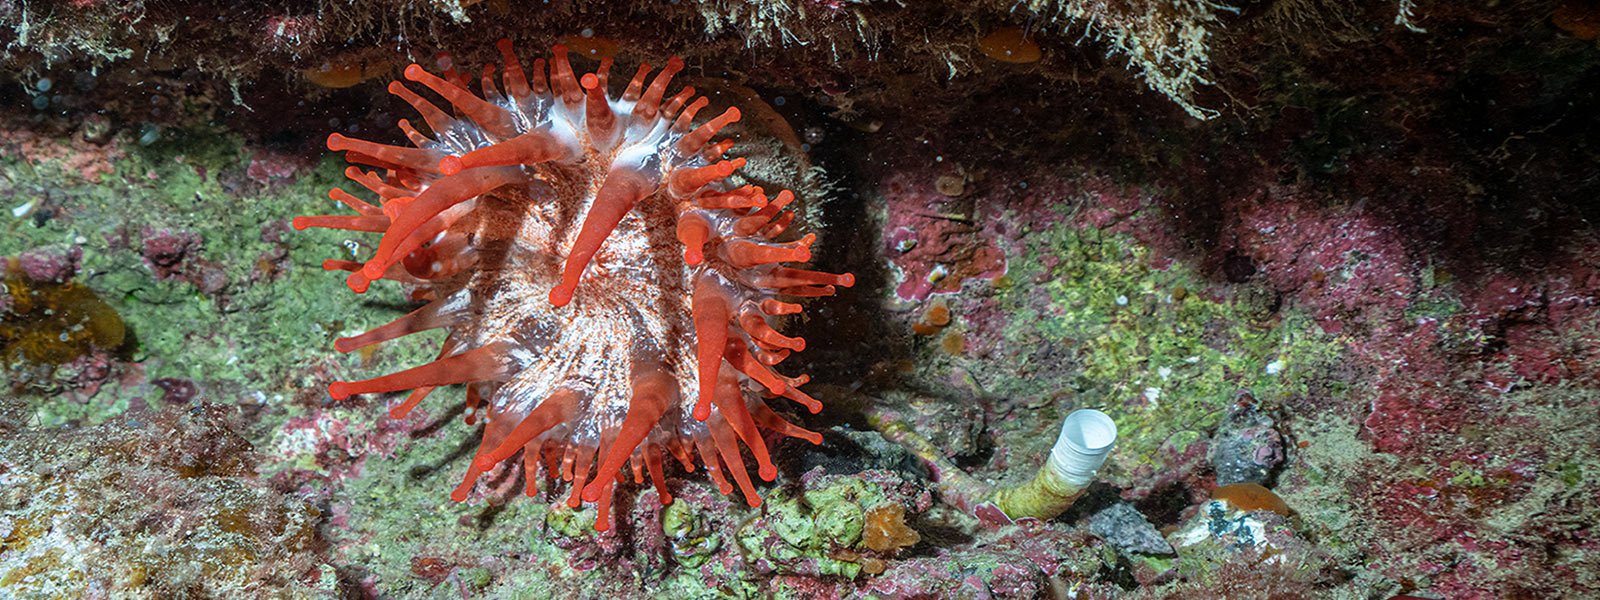 Rot/weiße Keulenanemone am Meeresboden.